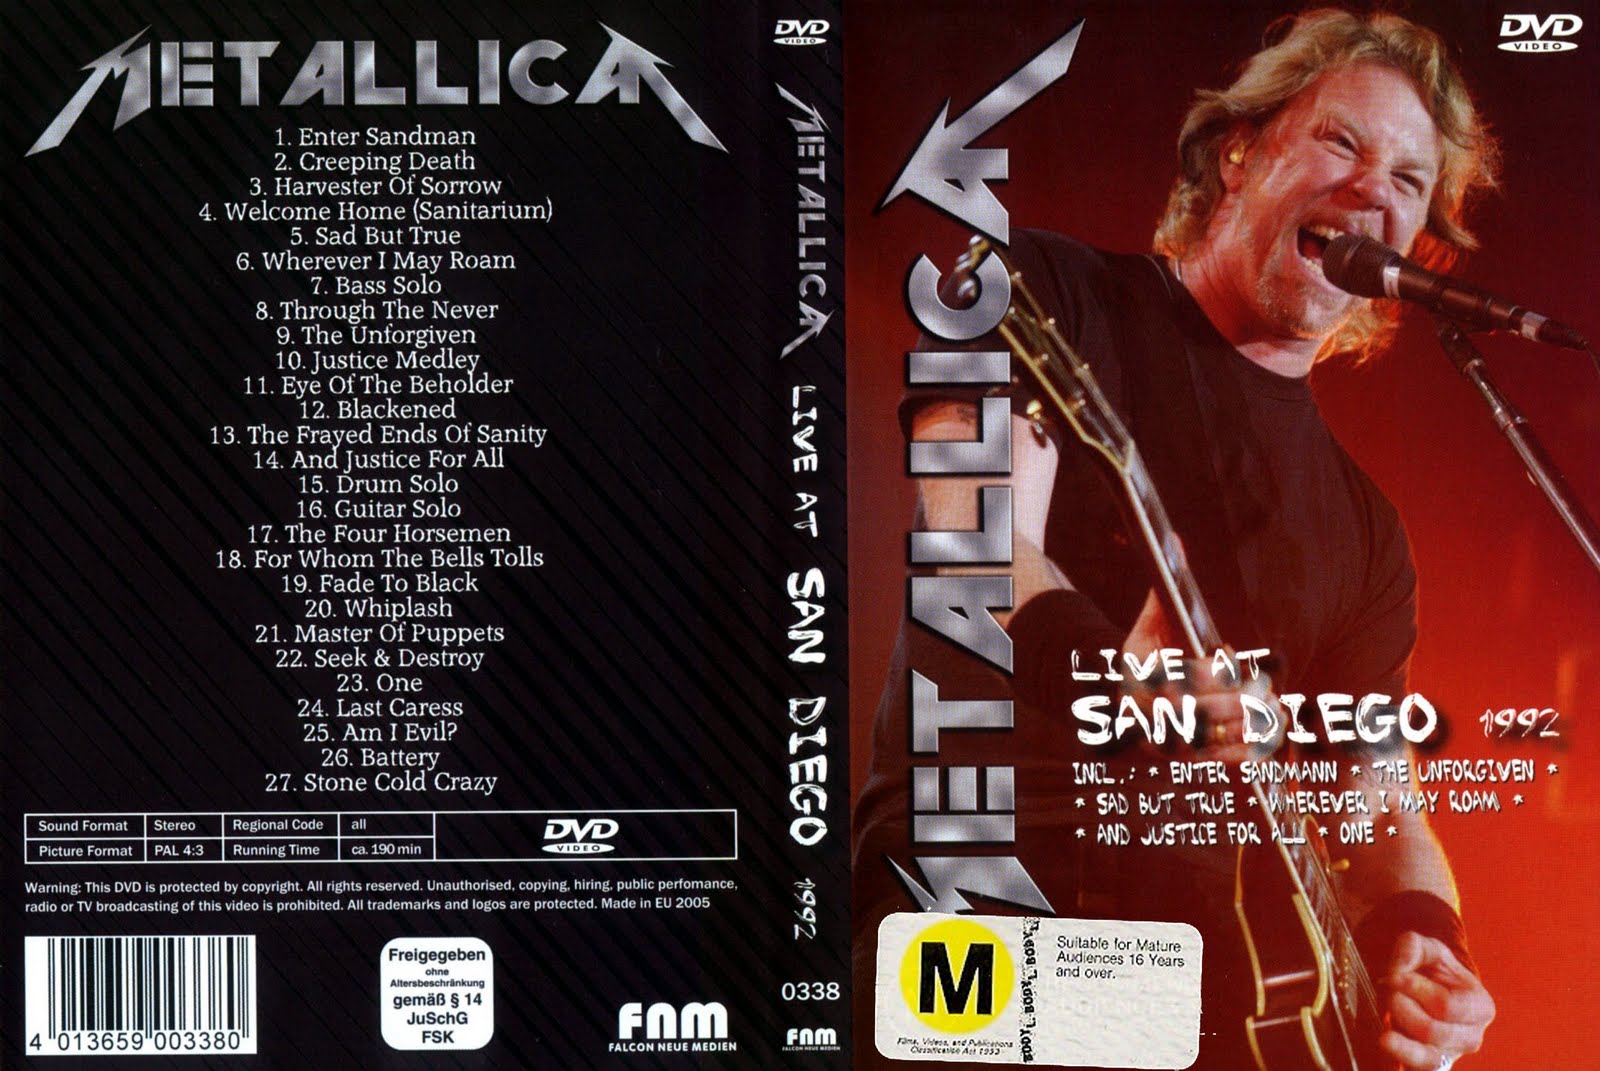 BOOTSLIVE: Metallica - Live at San Diego 1992 (DVD-Rip)